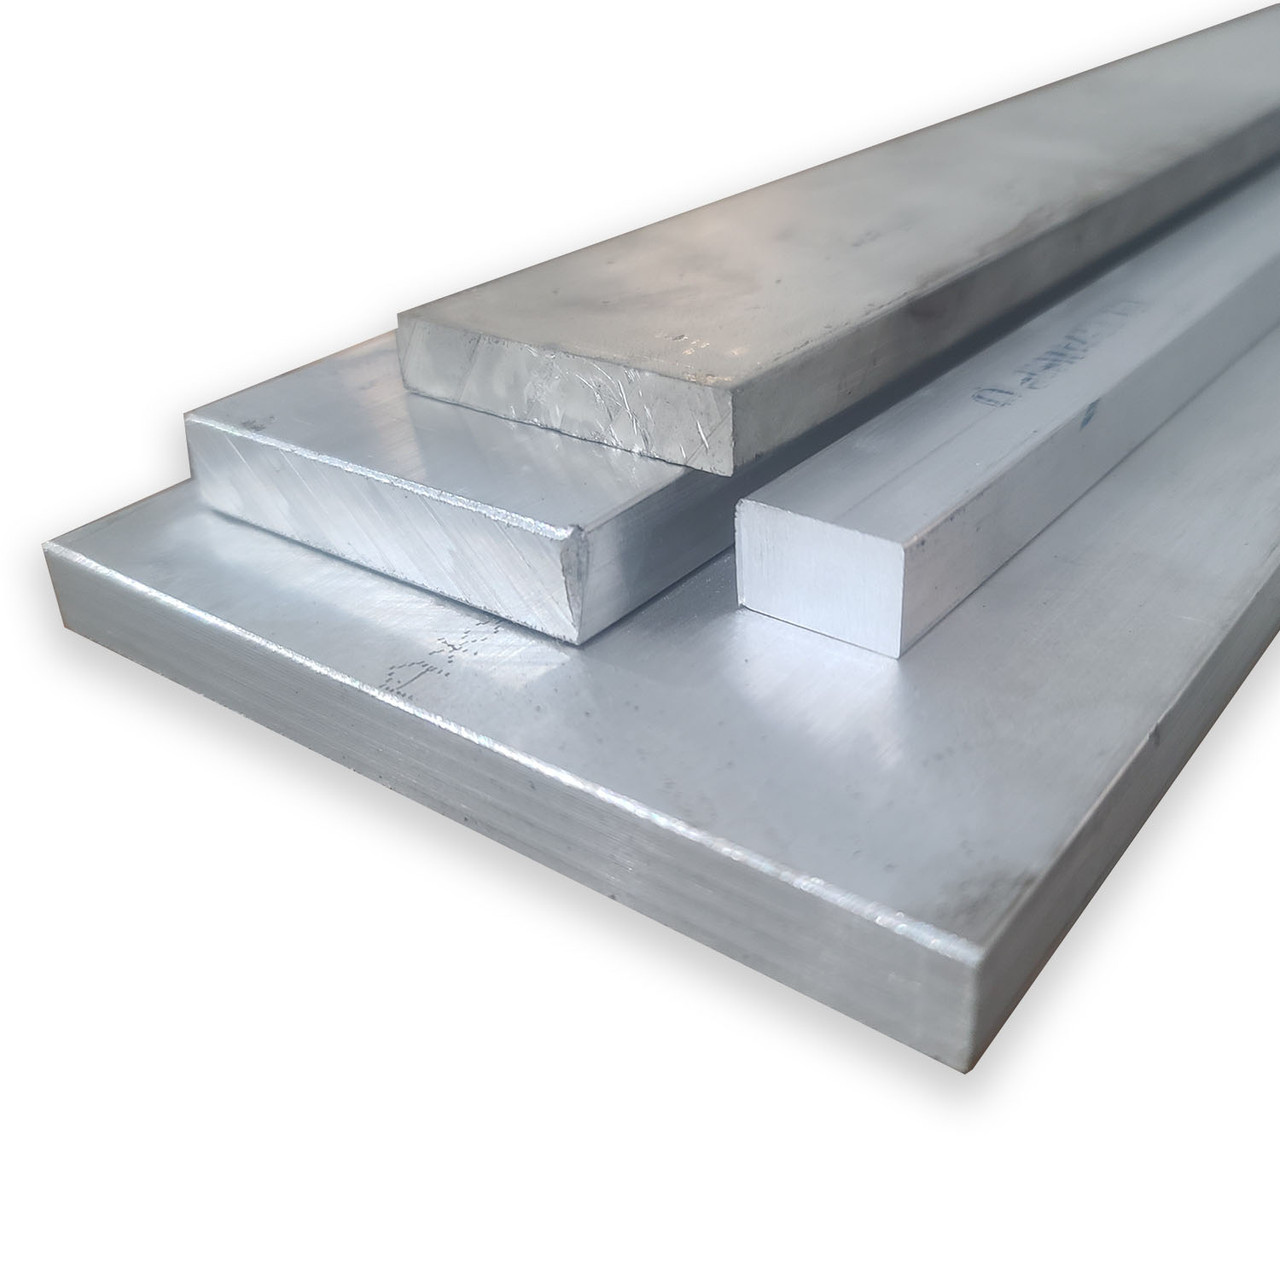 1.75" x 2" x 17", 2024-T351 Aluminum Flat Bar